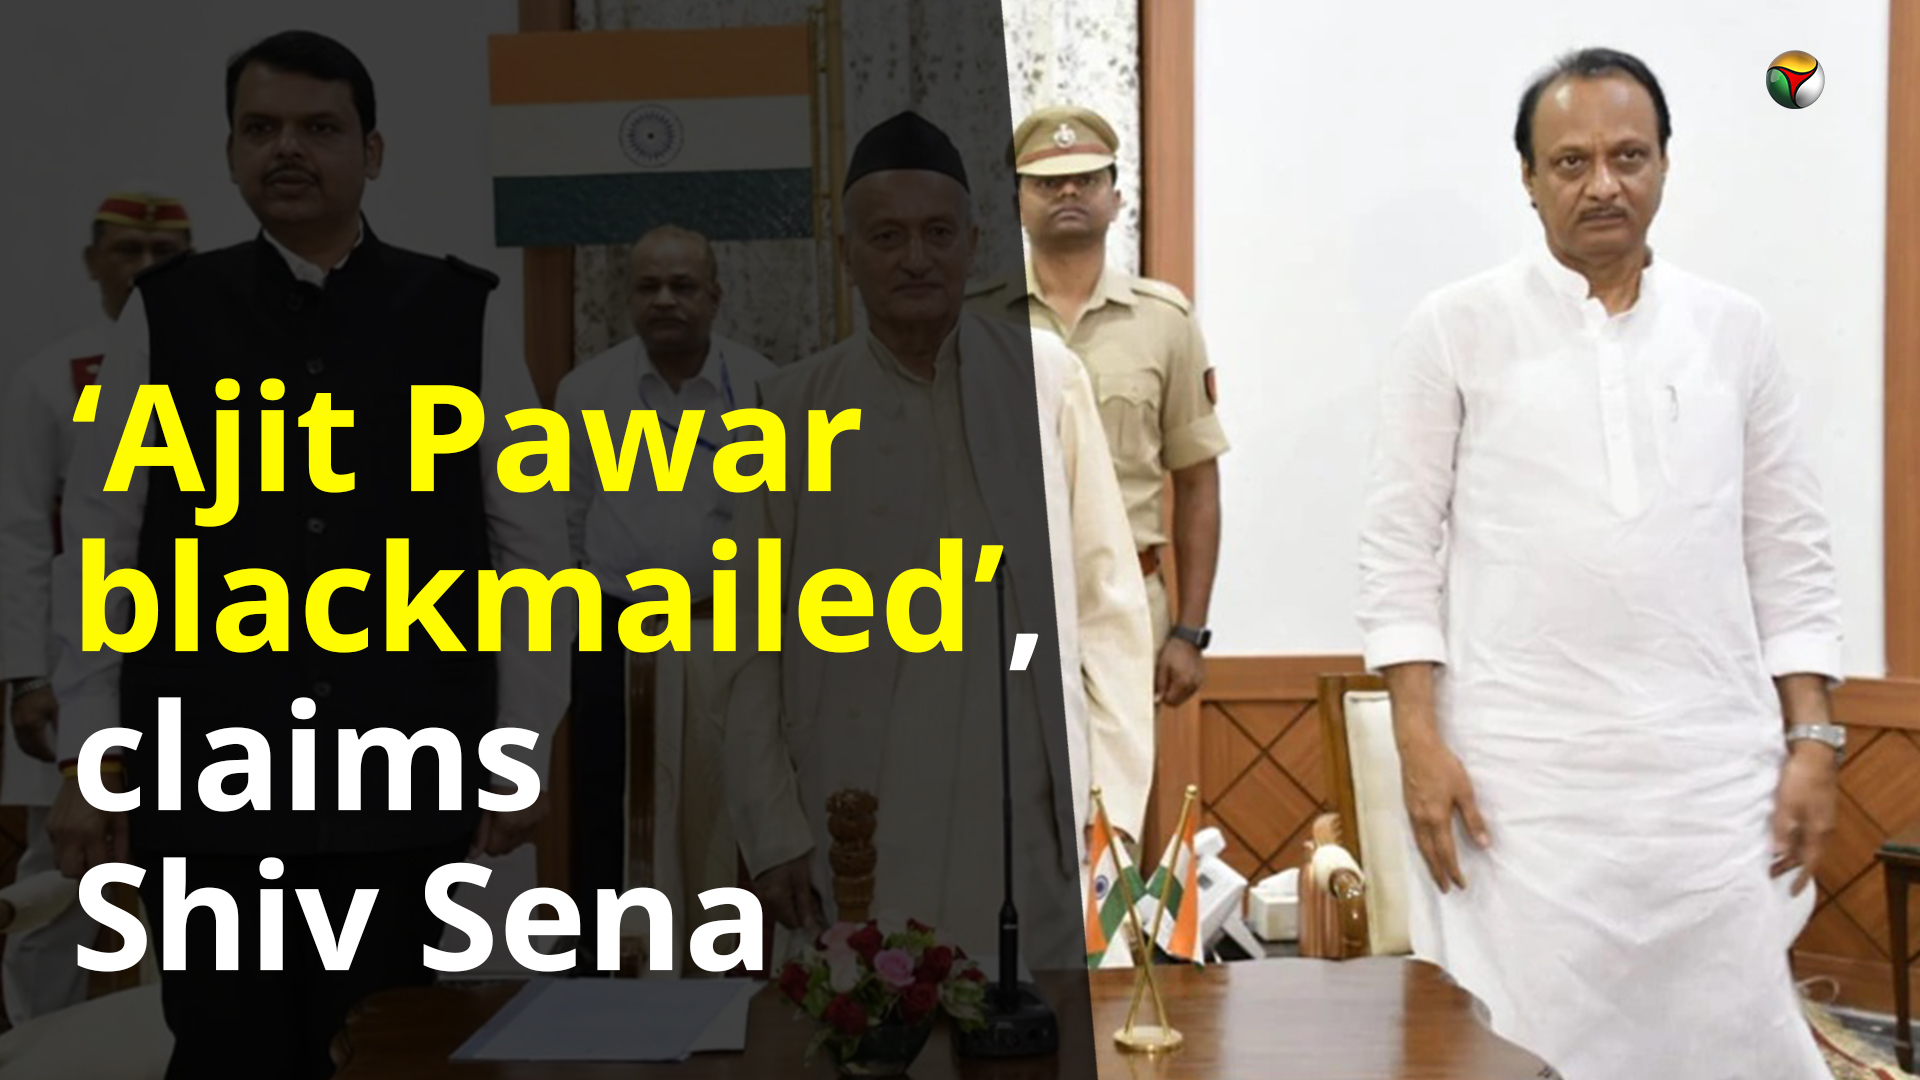 Ajit Pawar has been blackmailed claims Shiv Sena